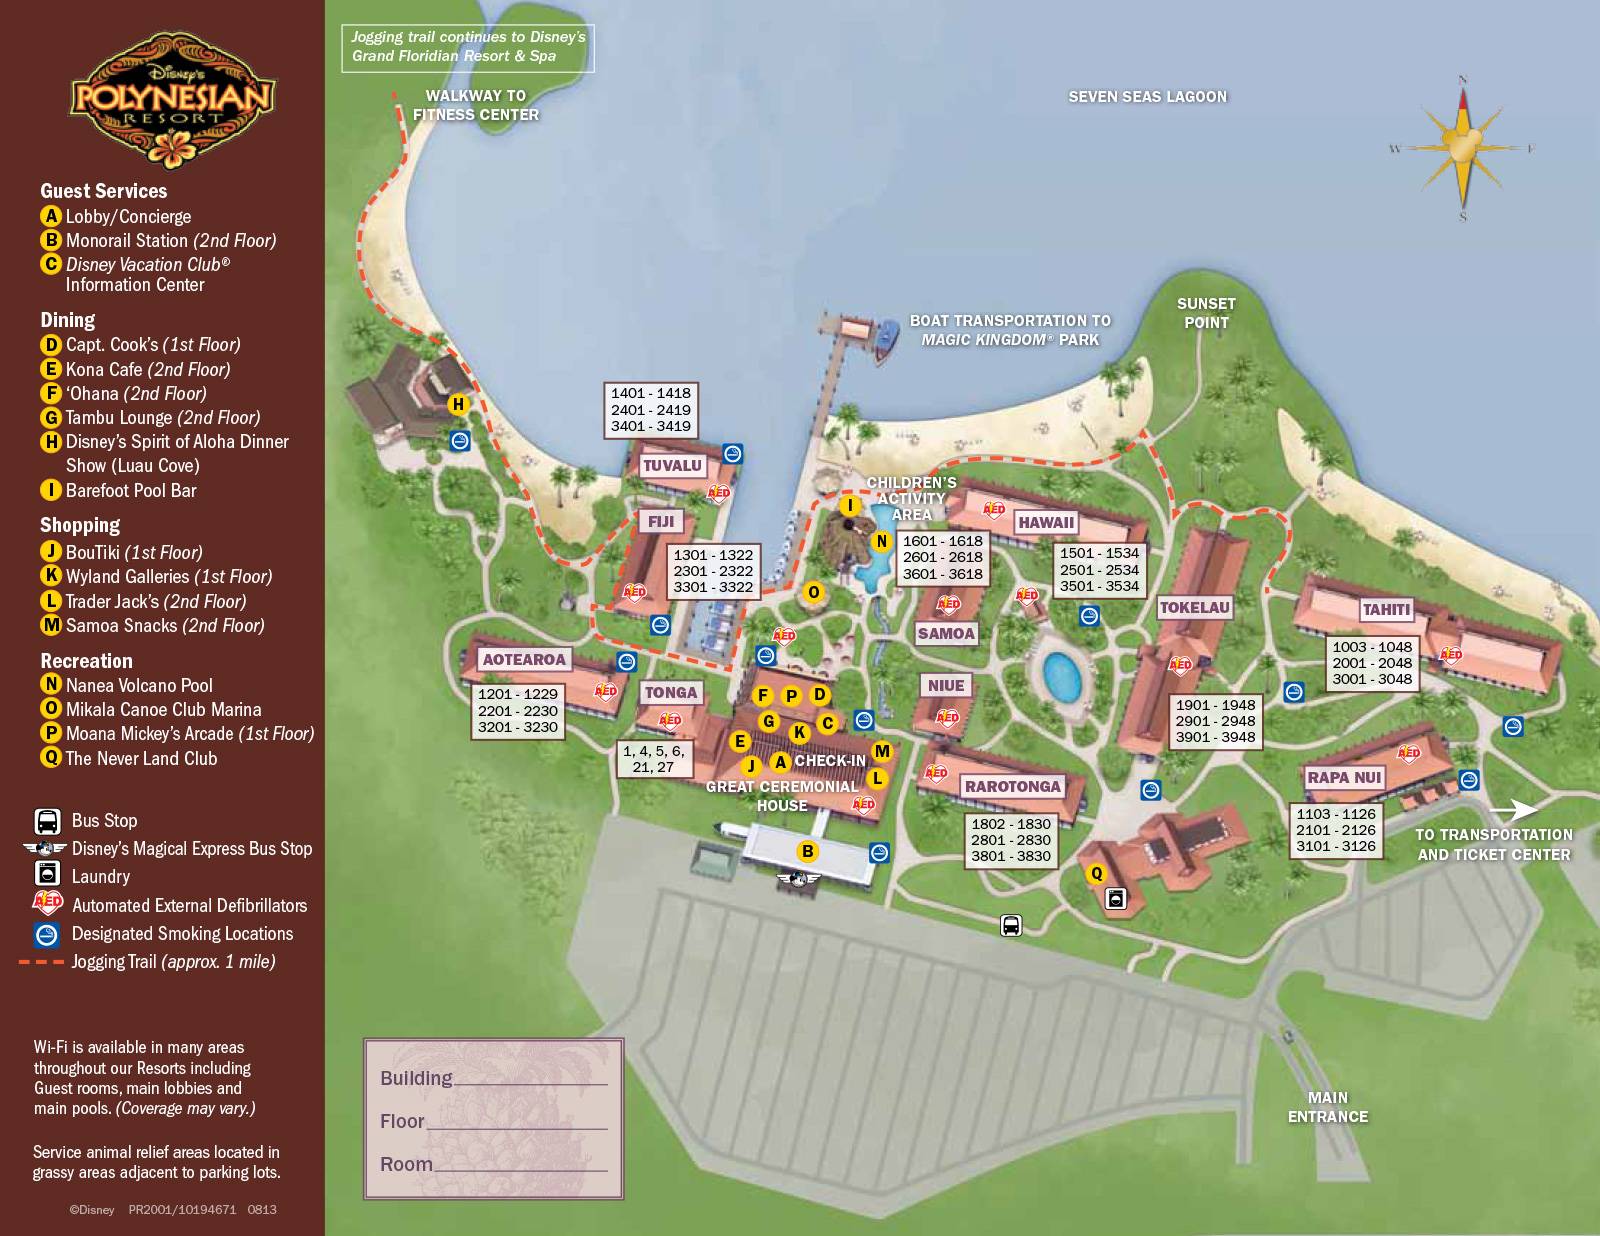 New 2013 Polynesian Resort map